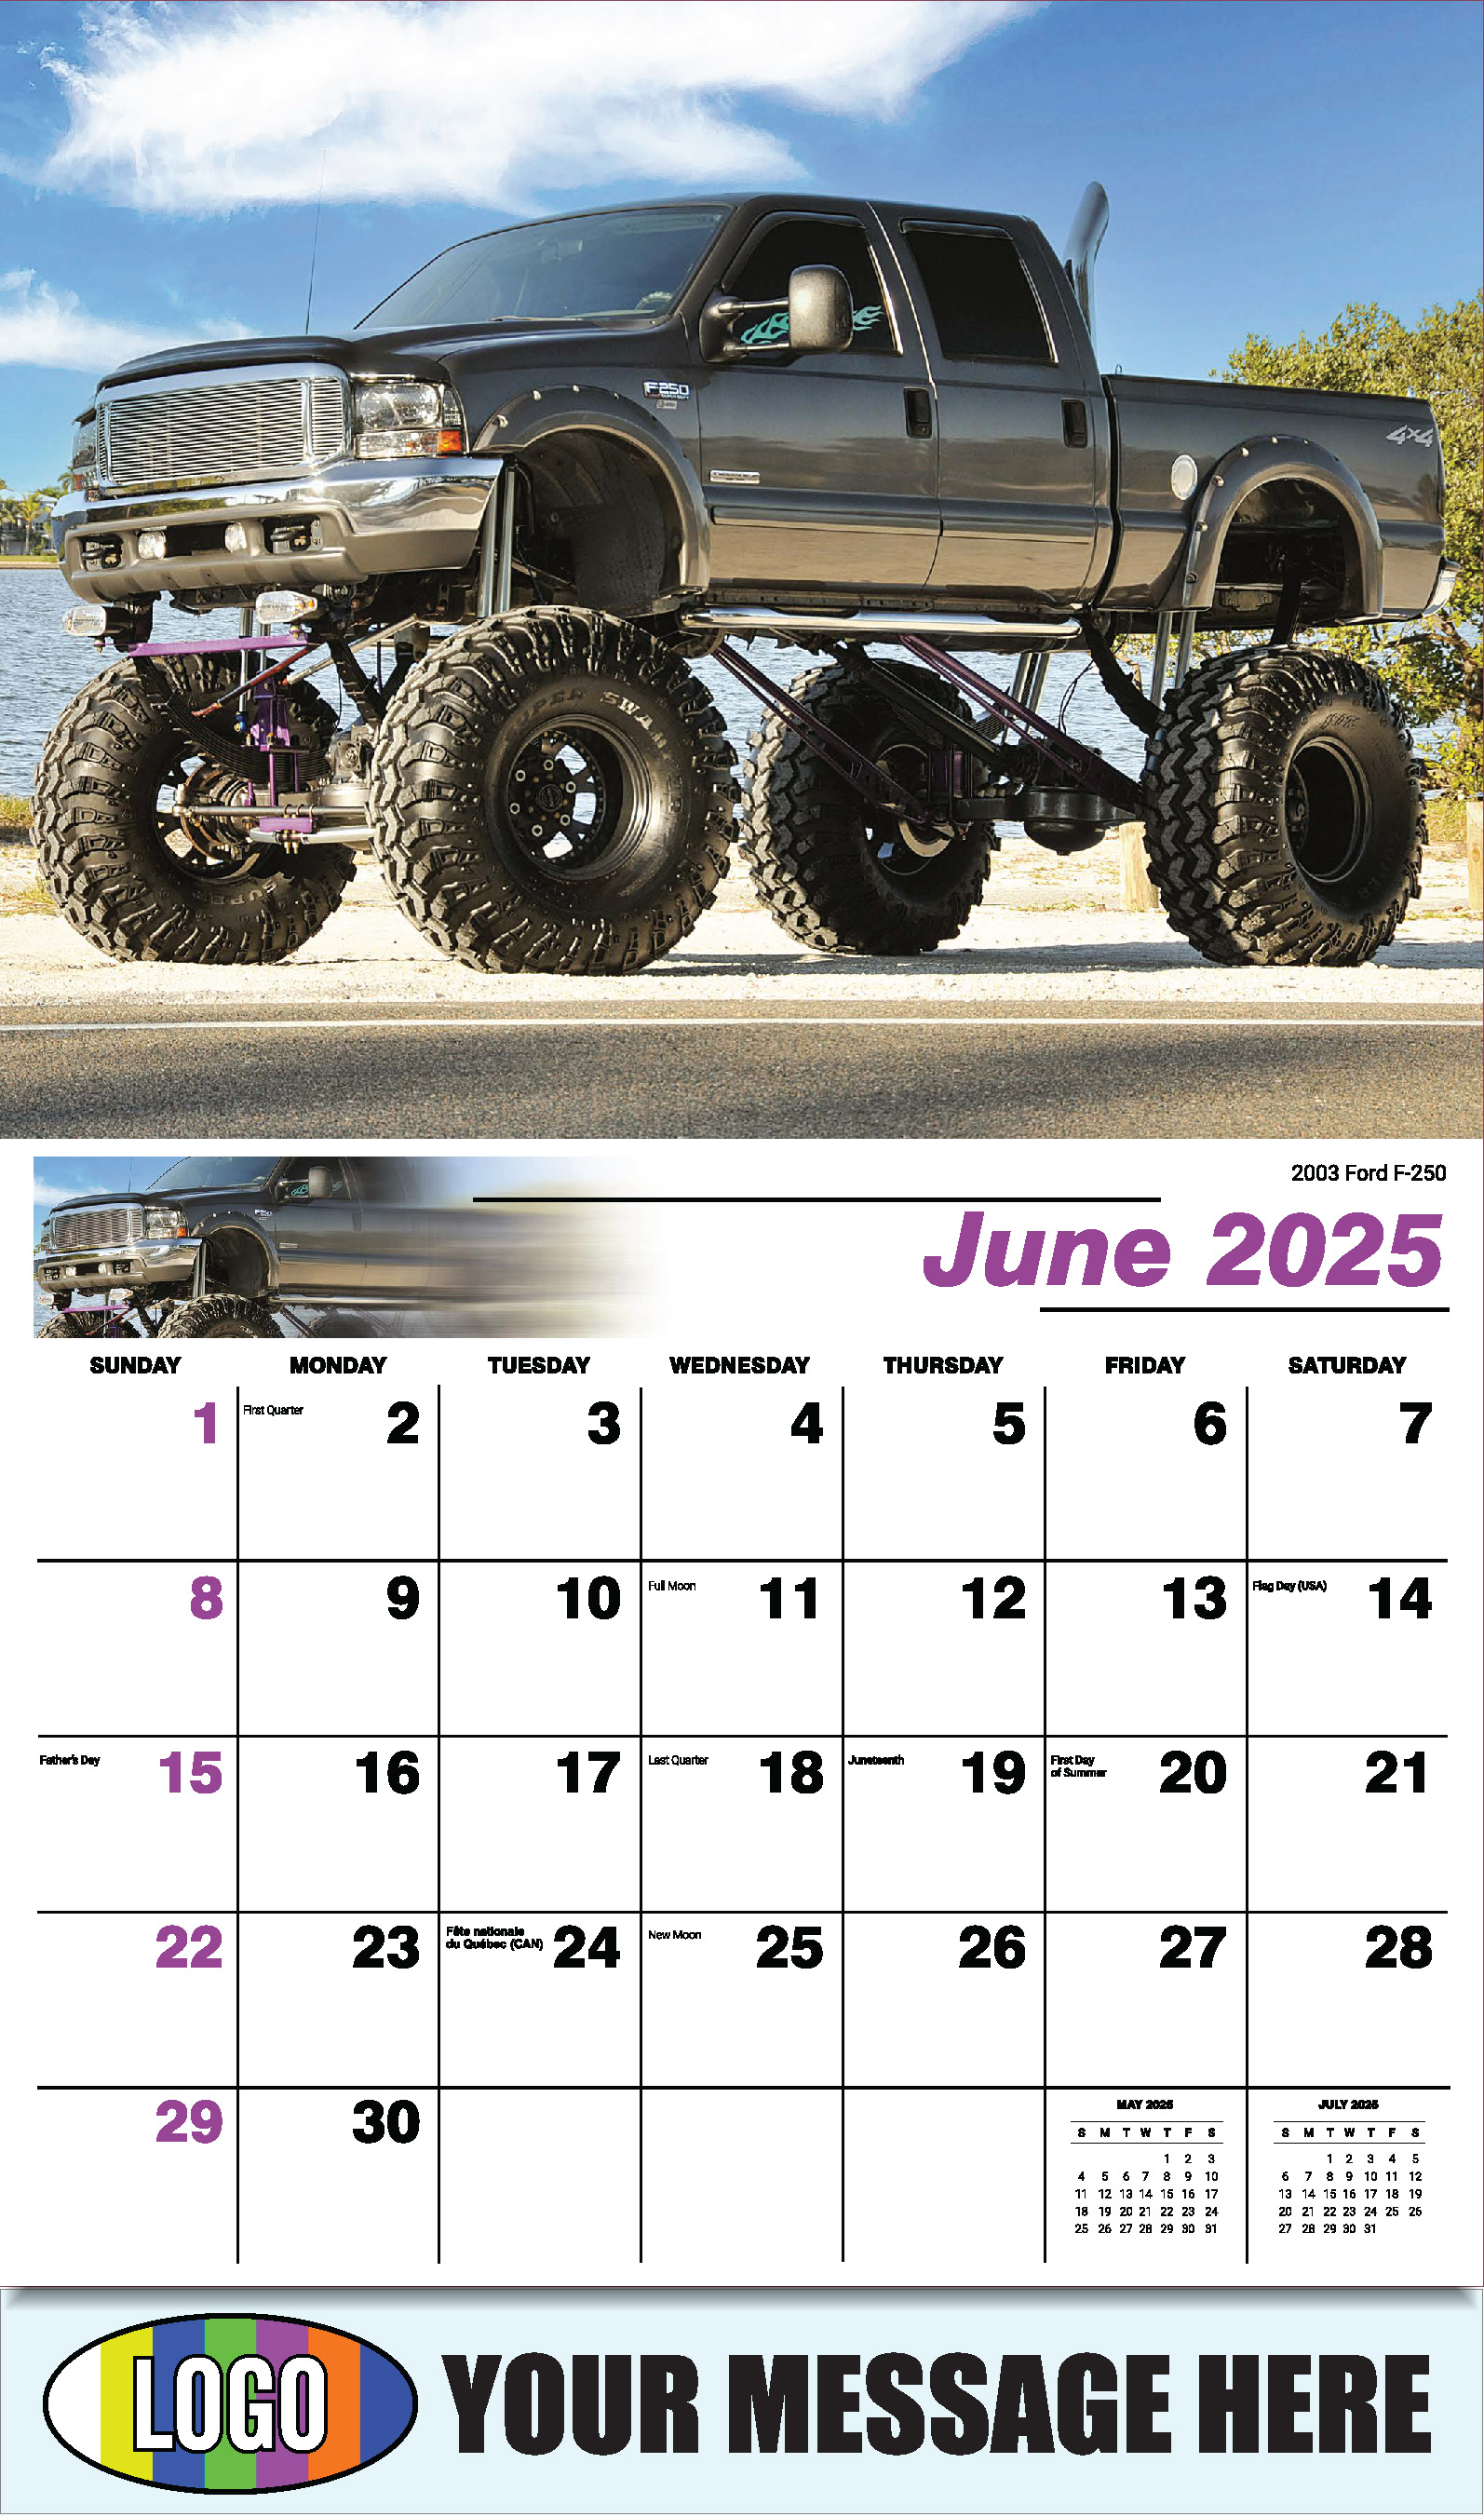 Pumped-Up Pickups 2025 Automotive Business Promo Calendar - June